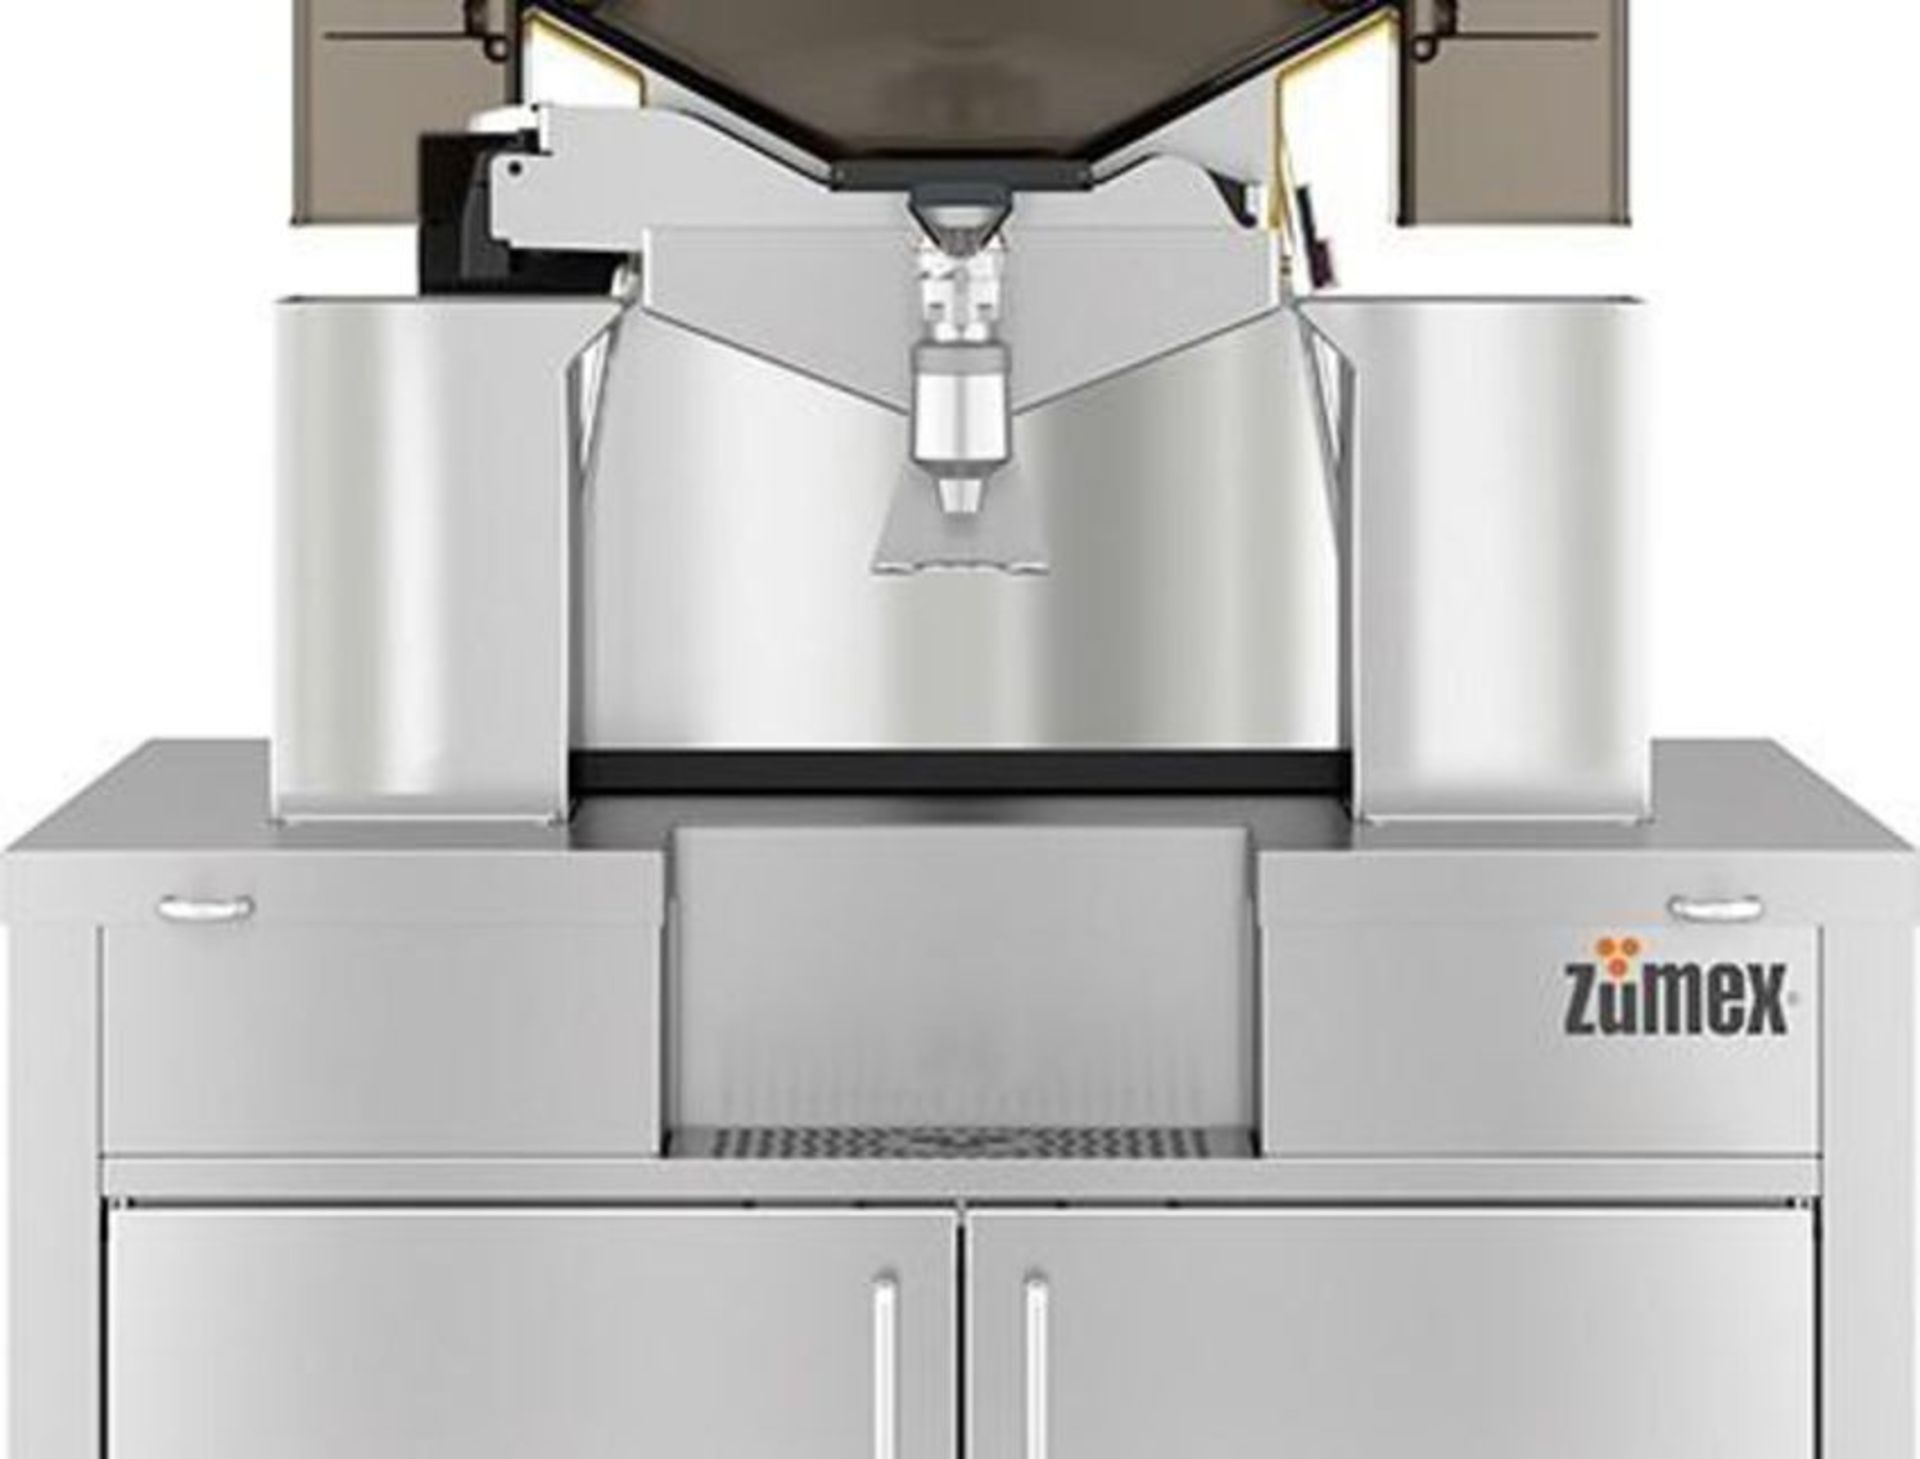 1 x Zumex Speed S +Plus Self-Service Podium Commercial Citrus Juicer - Manufactured in 2018 - Image 8 of 20